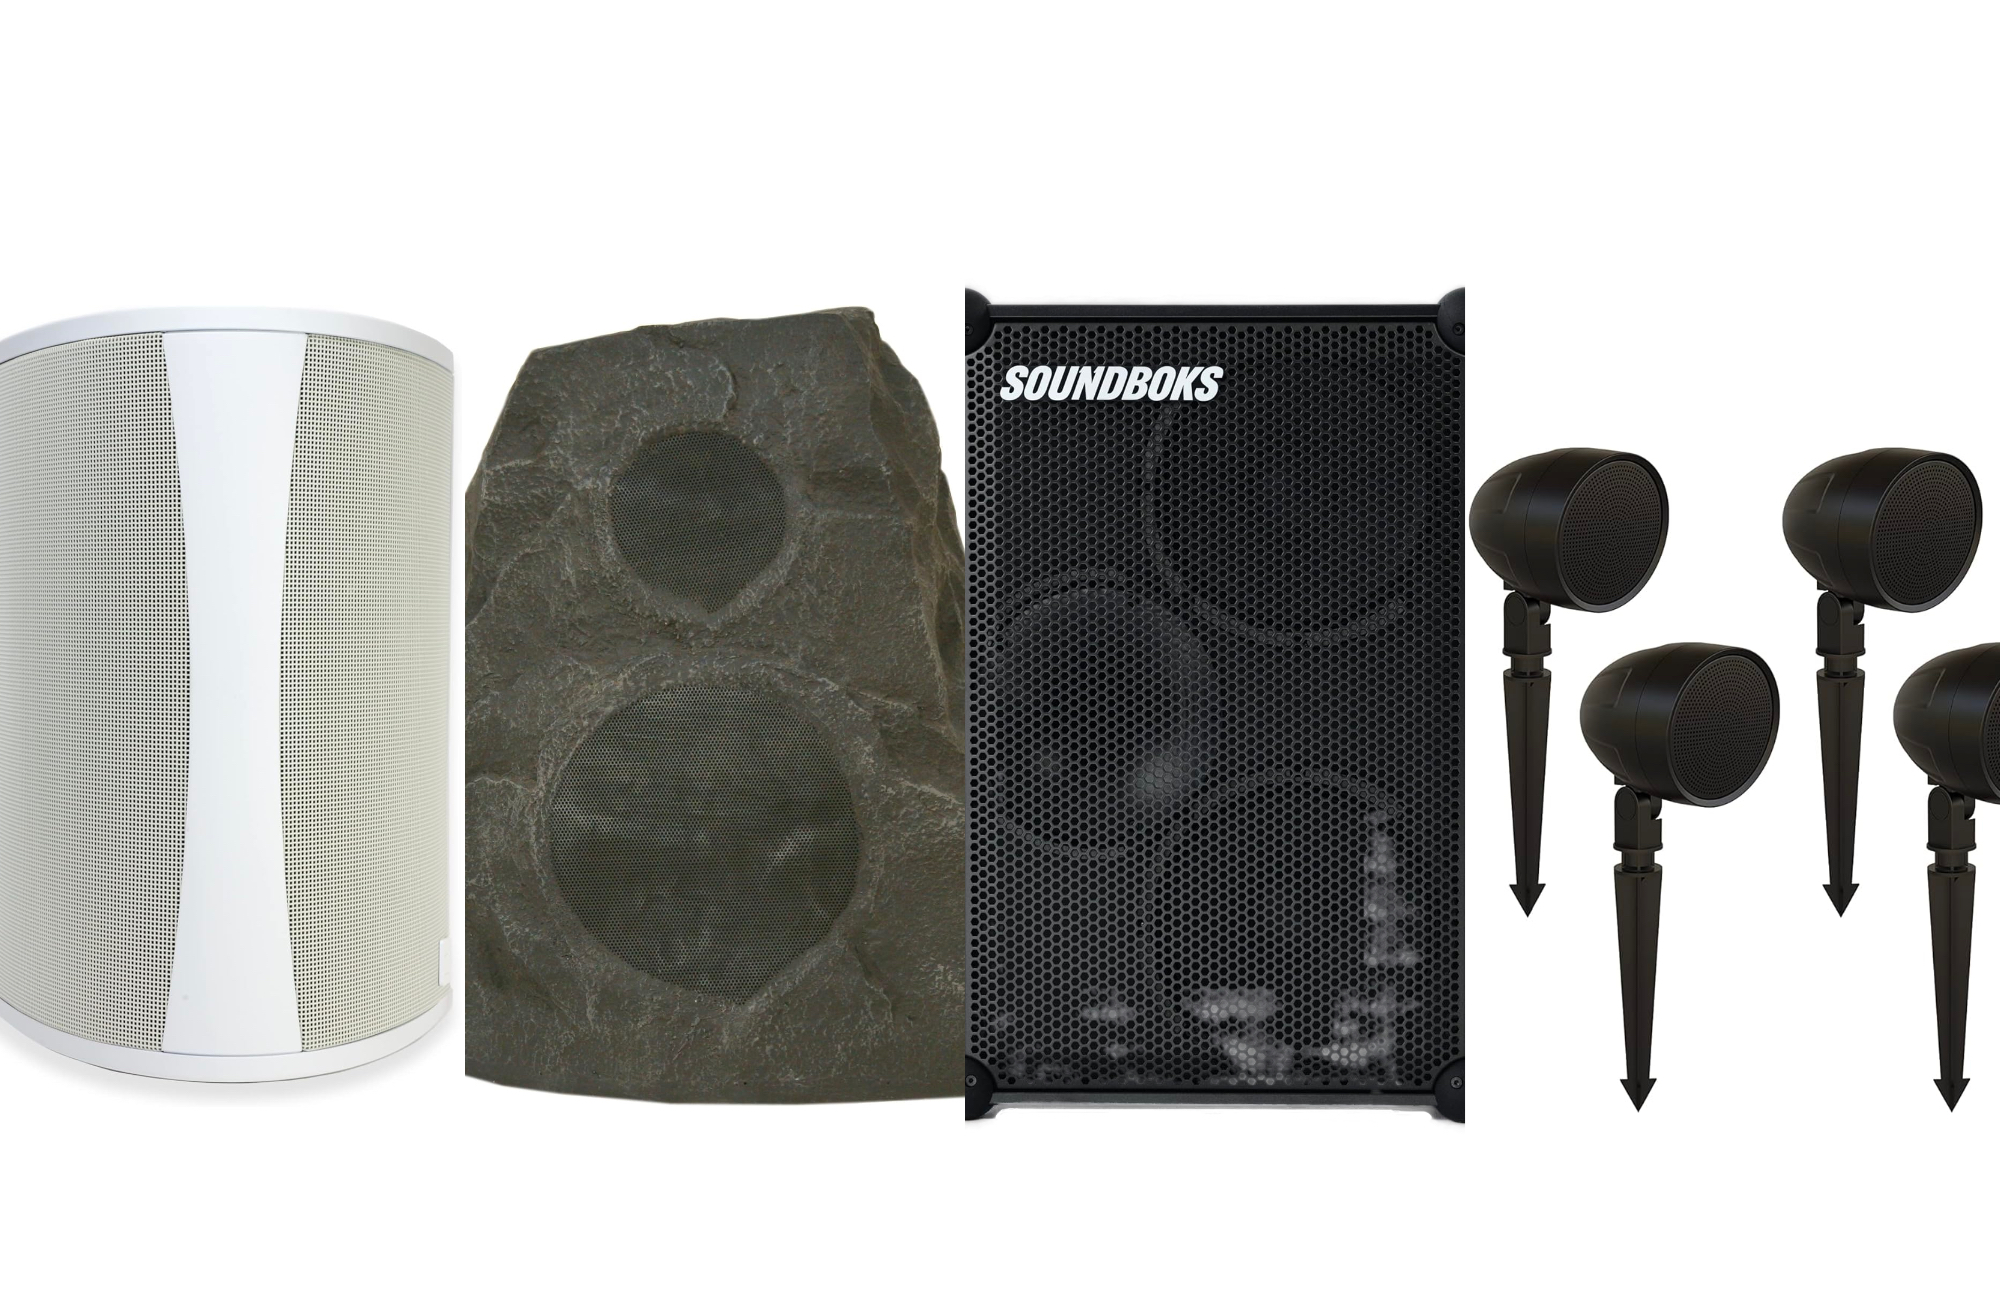 SOUNDBOKS Go: Loudest Bluetooth Party in a Box Speaker Ever?